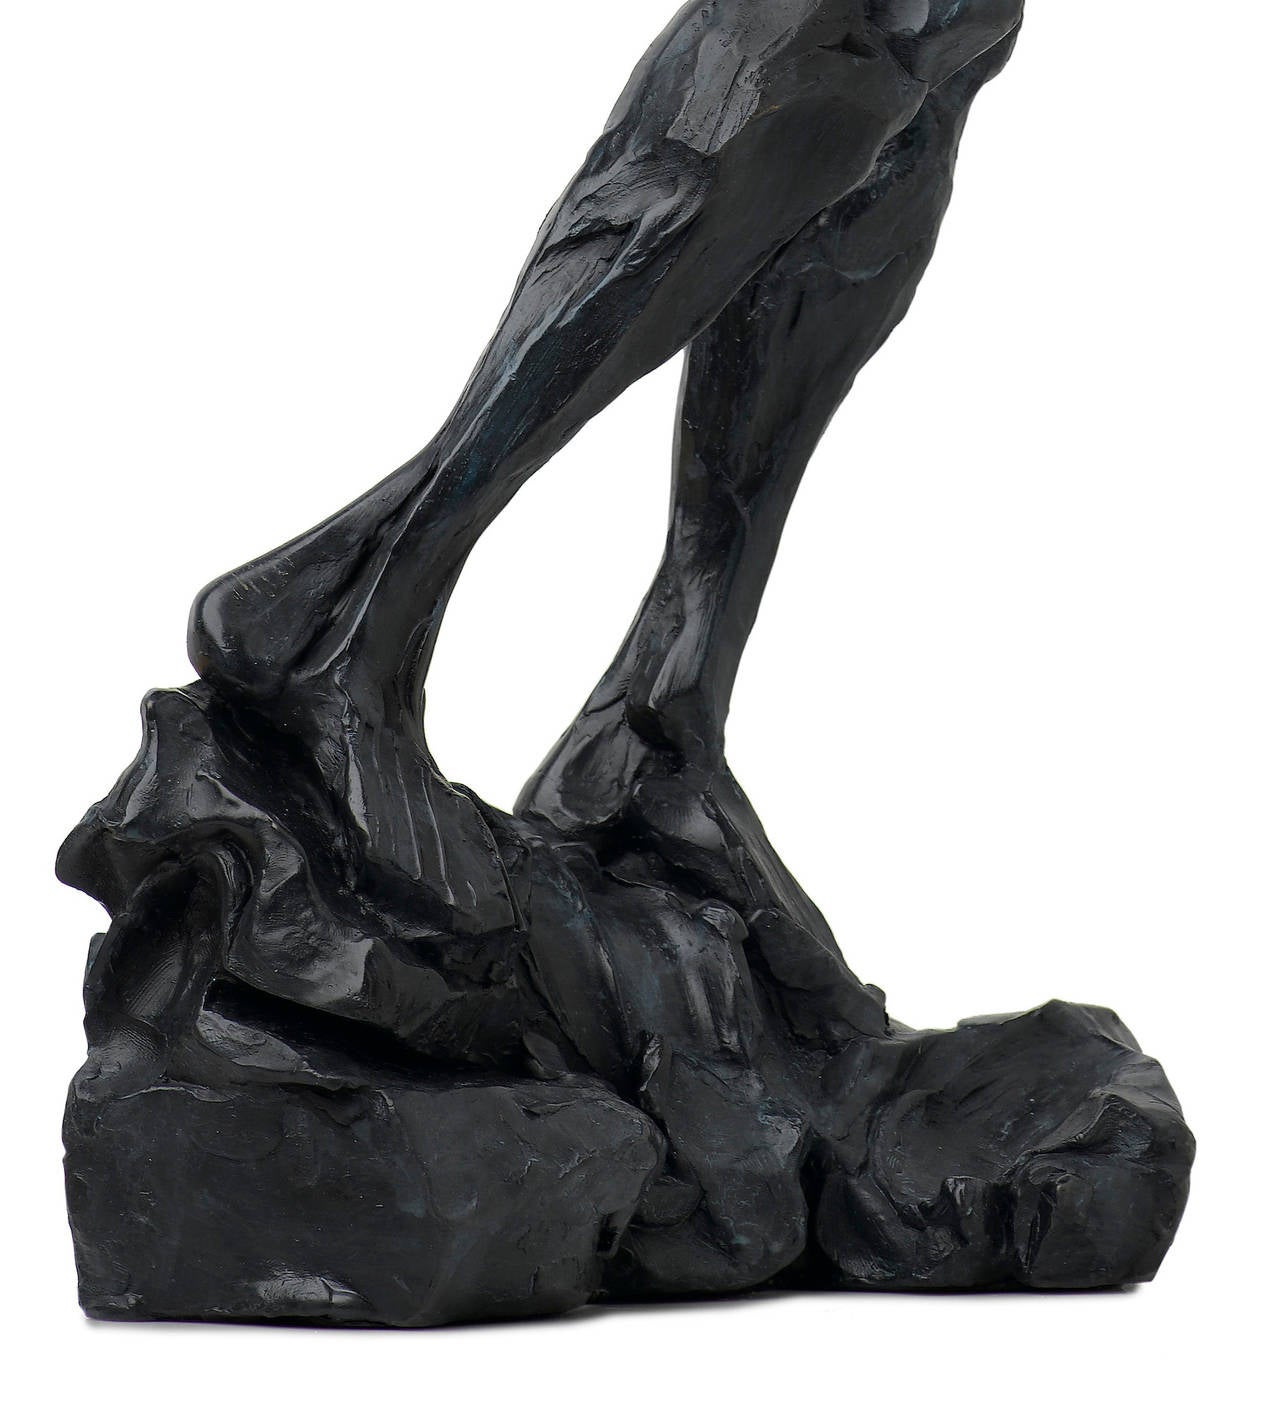 Untitled XXVII 4/8 - emotive, nude, female, figurative, patina, bronze statuette - Contemporary Sculpture by Richard Tosczak